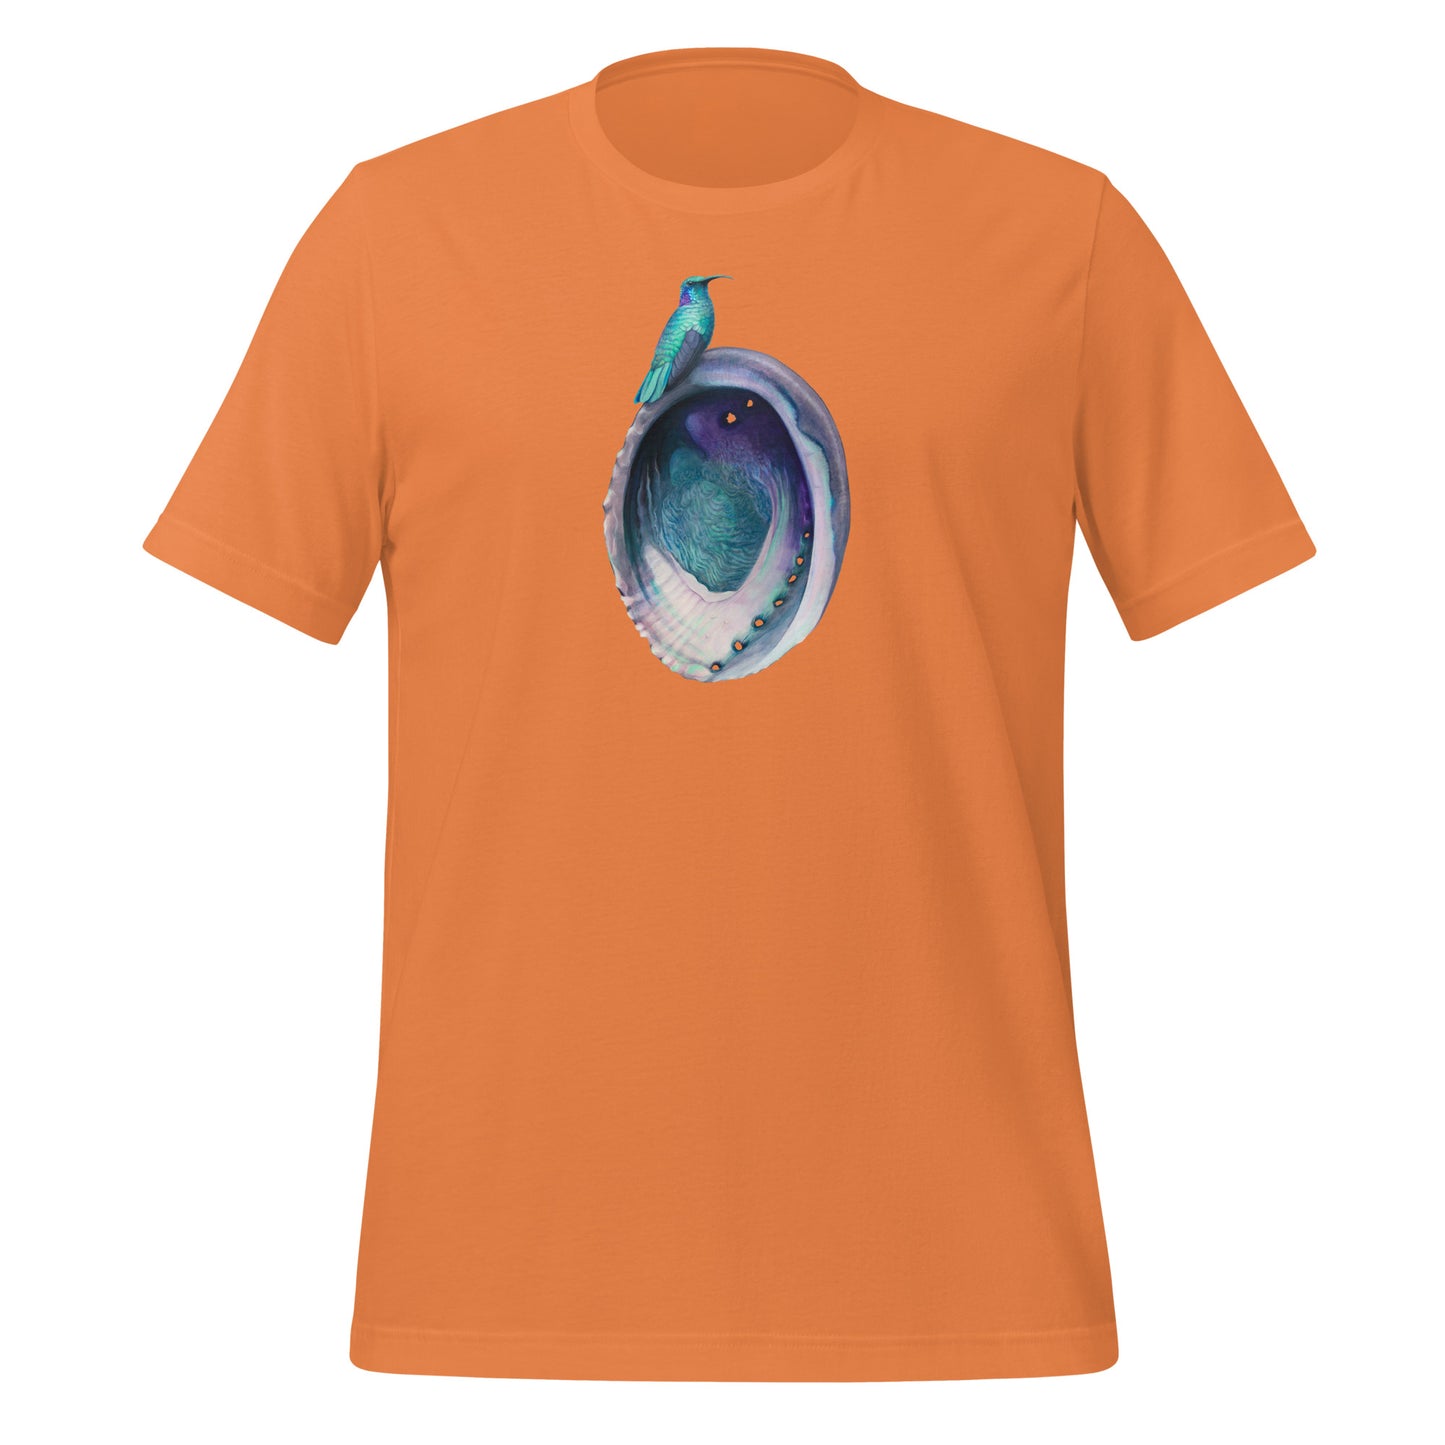 Hummingbird on Abalone Lightweight Cotton Unisex T-Shirt